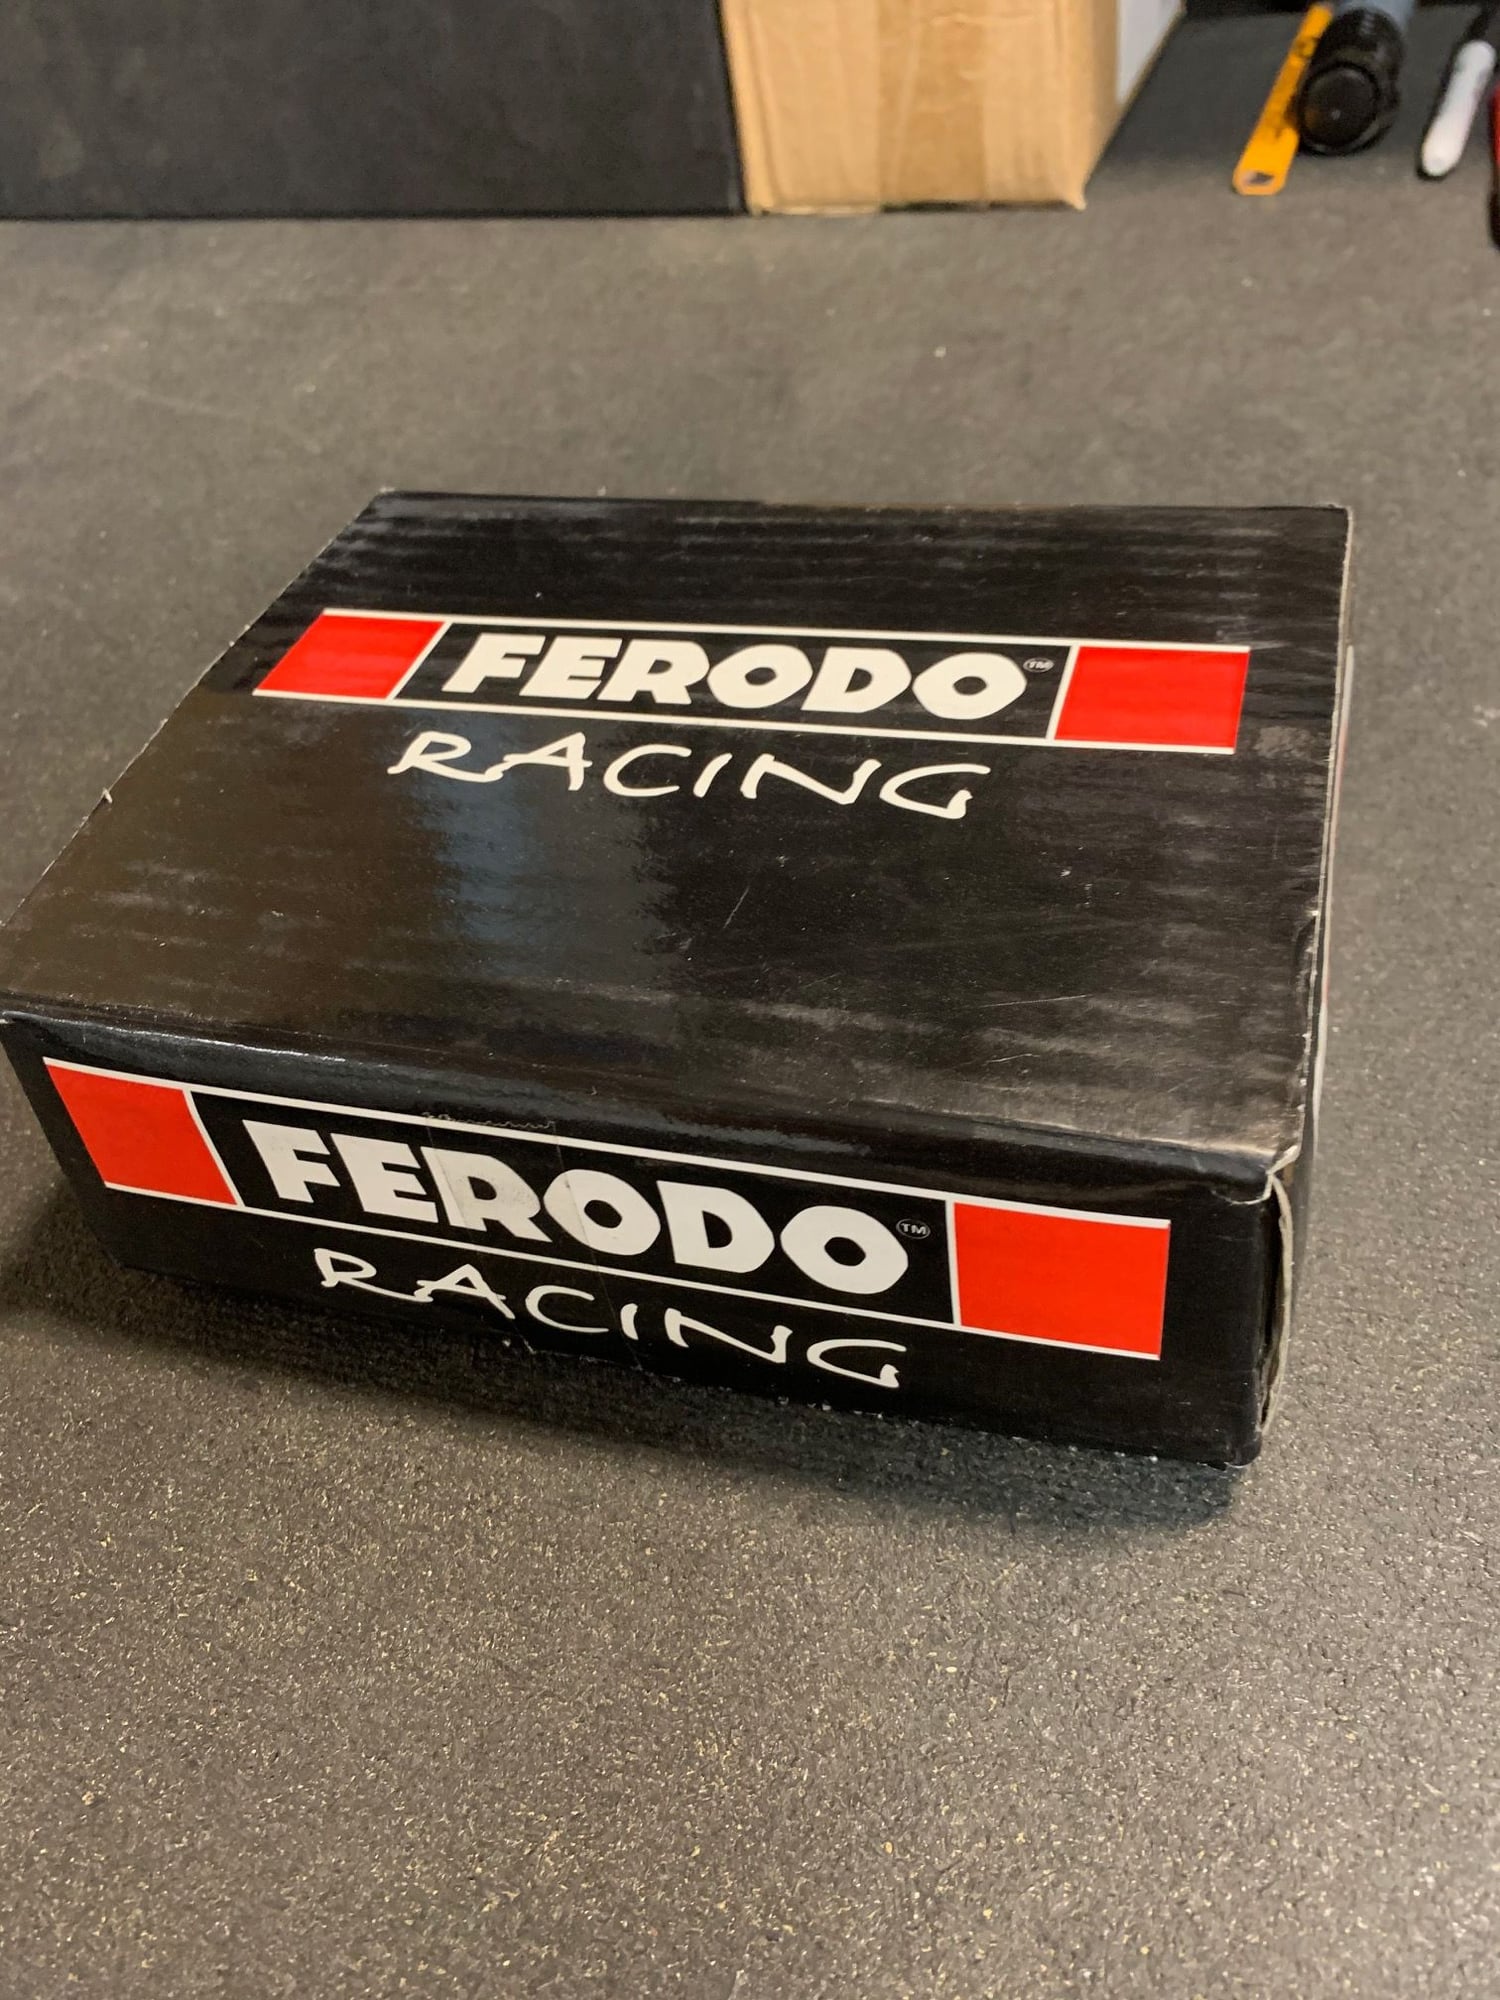 Brakes - Ferodo DS1.11 Pads - New - San Francisco, CA 94109, United States